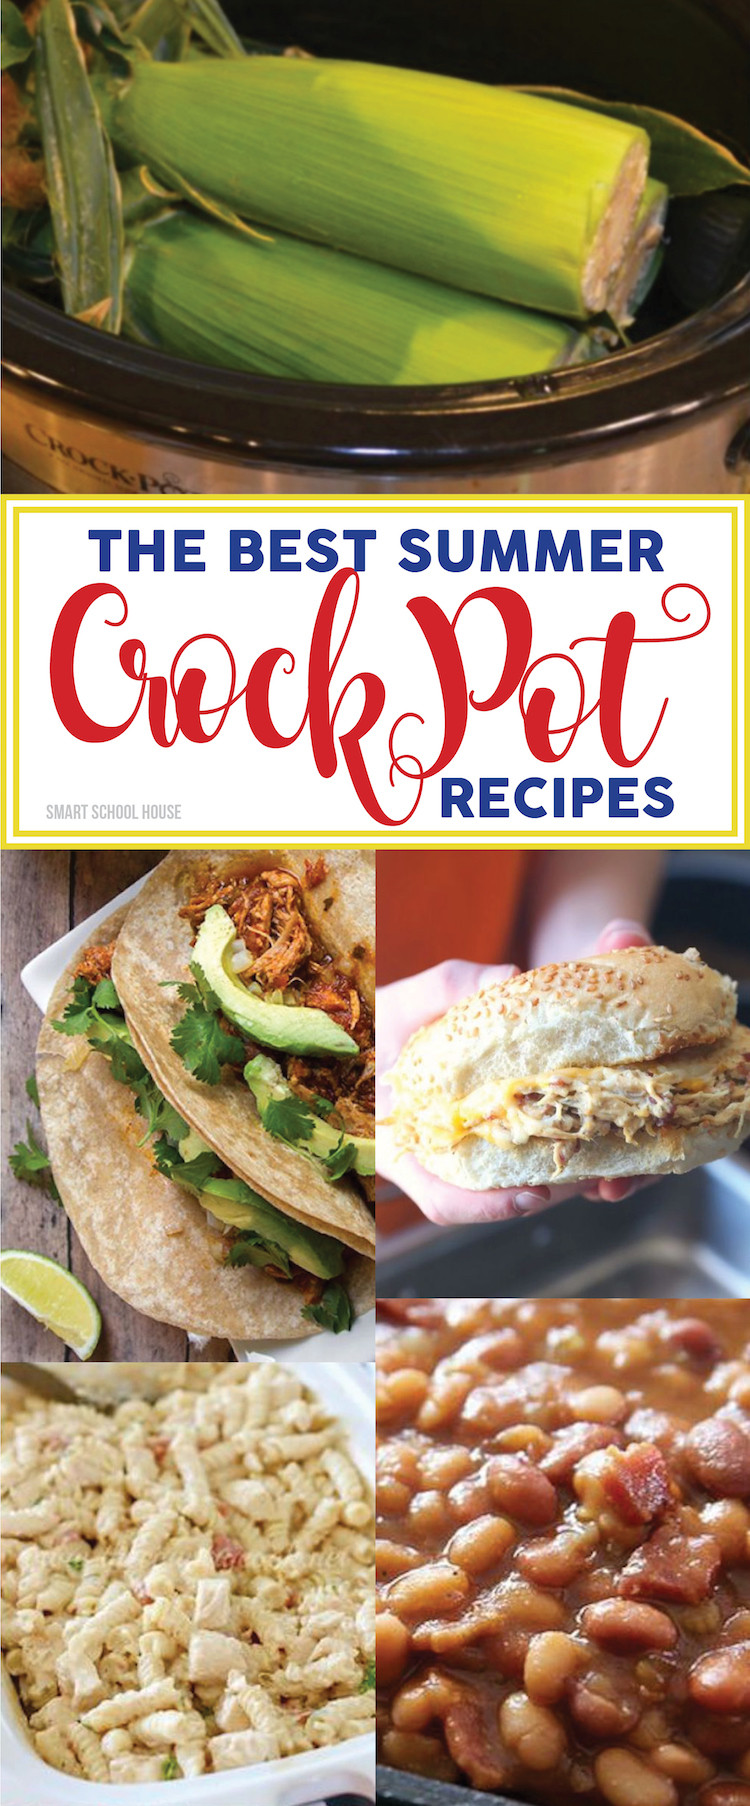 Summer Crock Pot Ideas
 Summer Crock Pot Recipes Smart School House